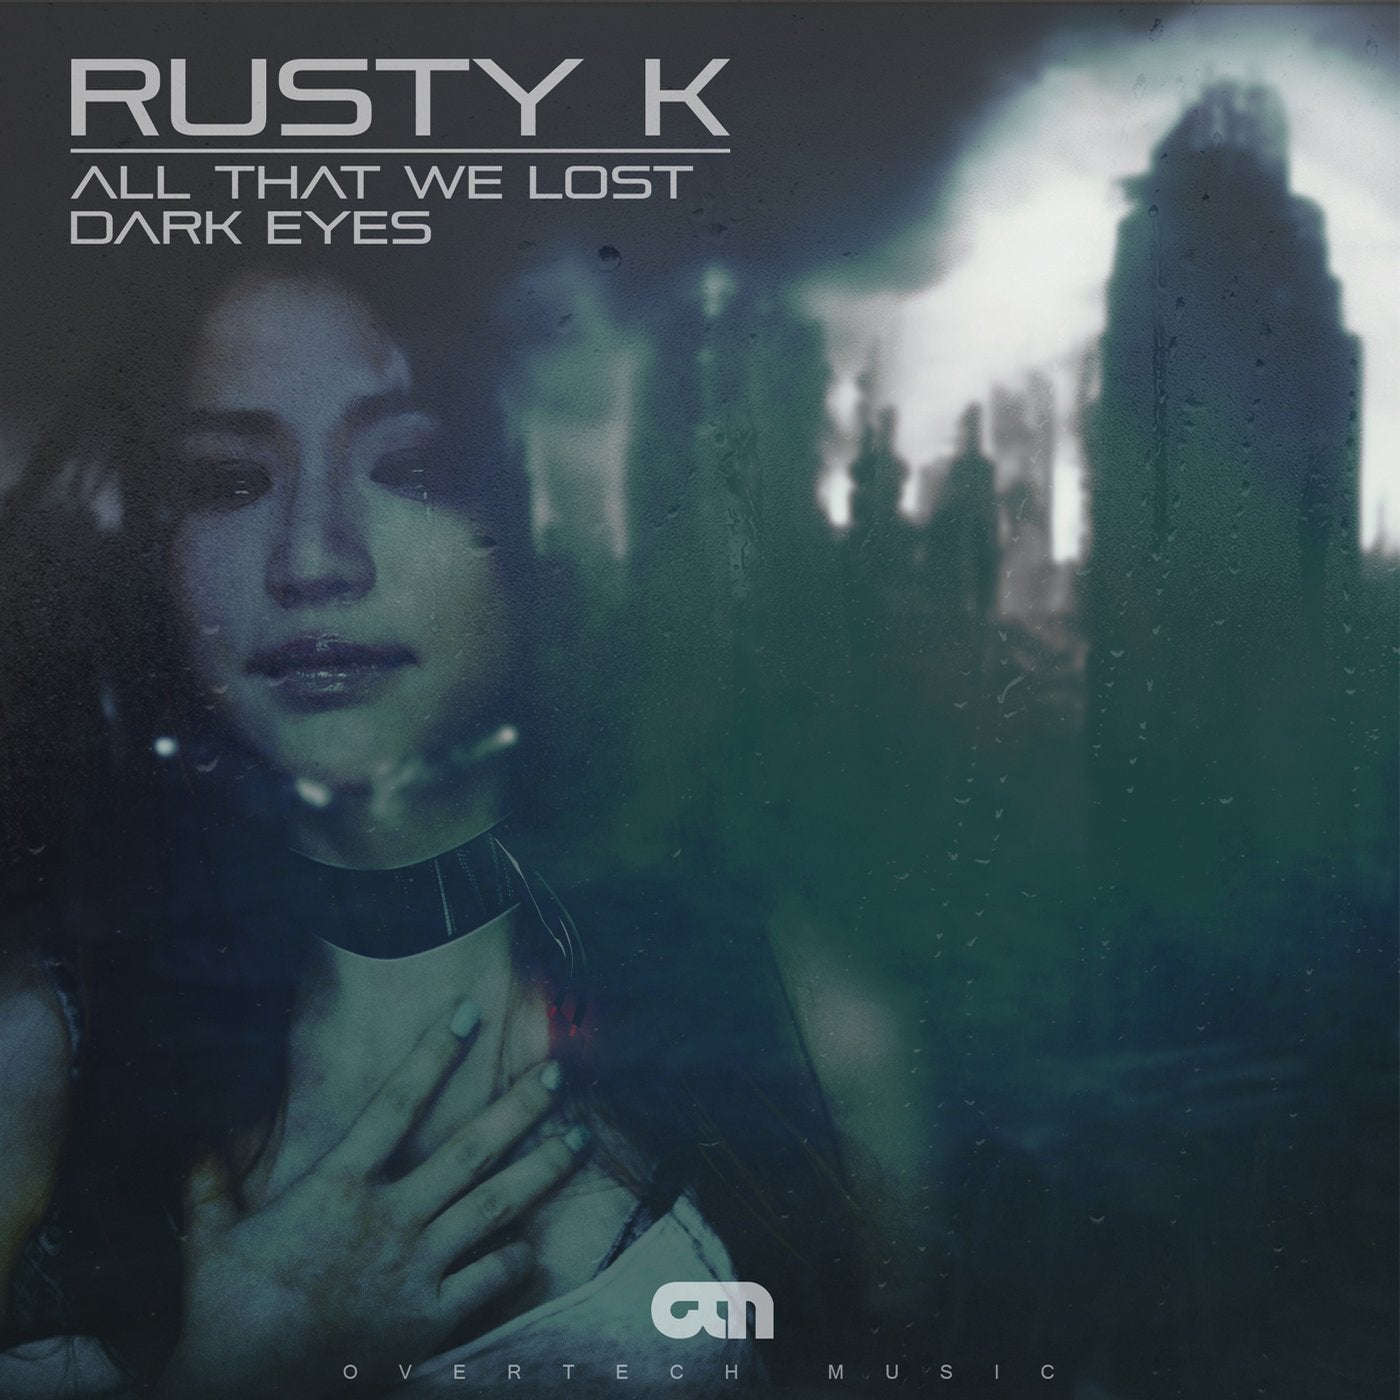 Dark eyed перевод. Rusty k Dark Eyes Original. The Dark Eye. Rusty k. All that we Lost Rusty k.